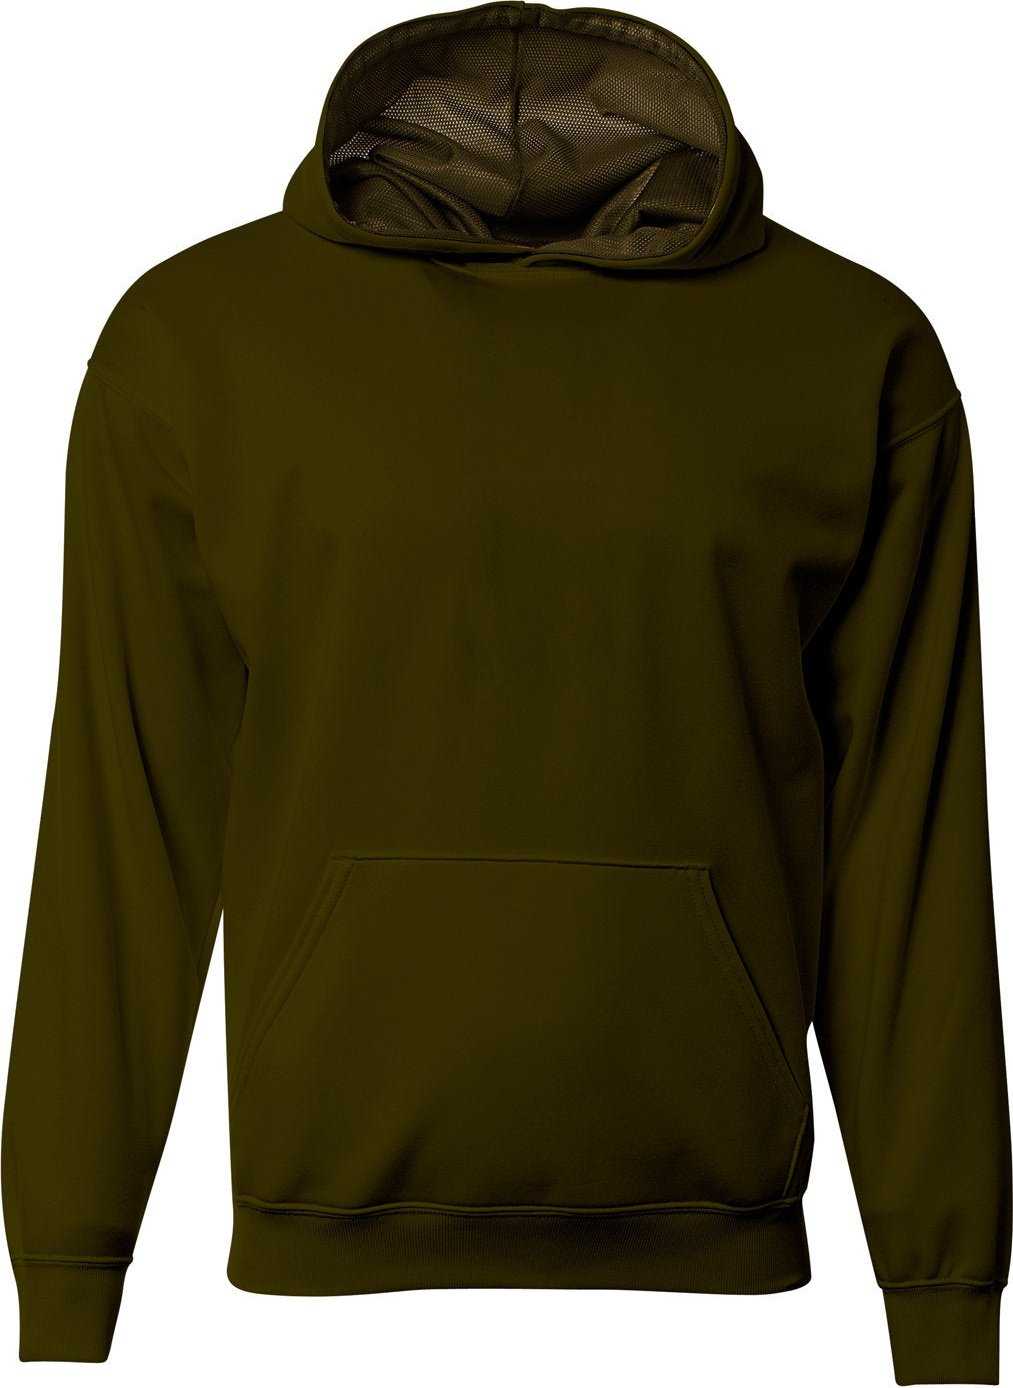 A4 NB4279 Youth Sprint Hooded Sweatshirt - Military Green